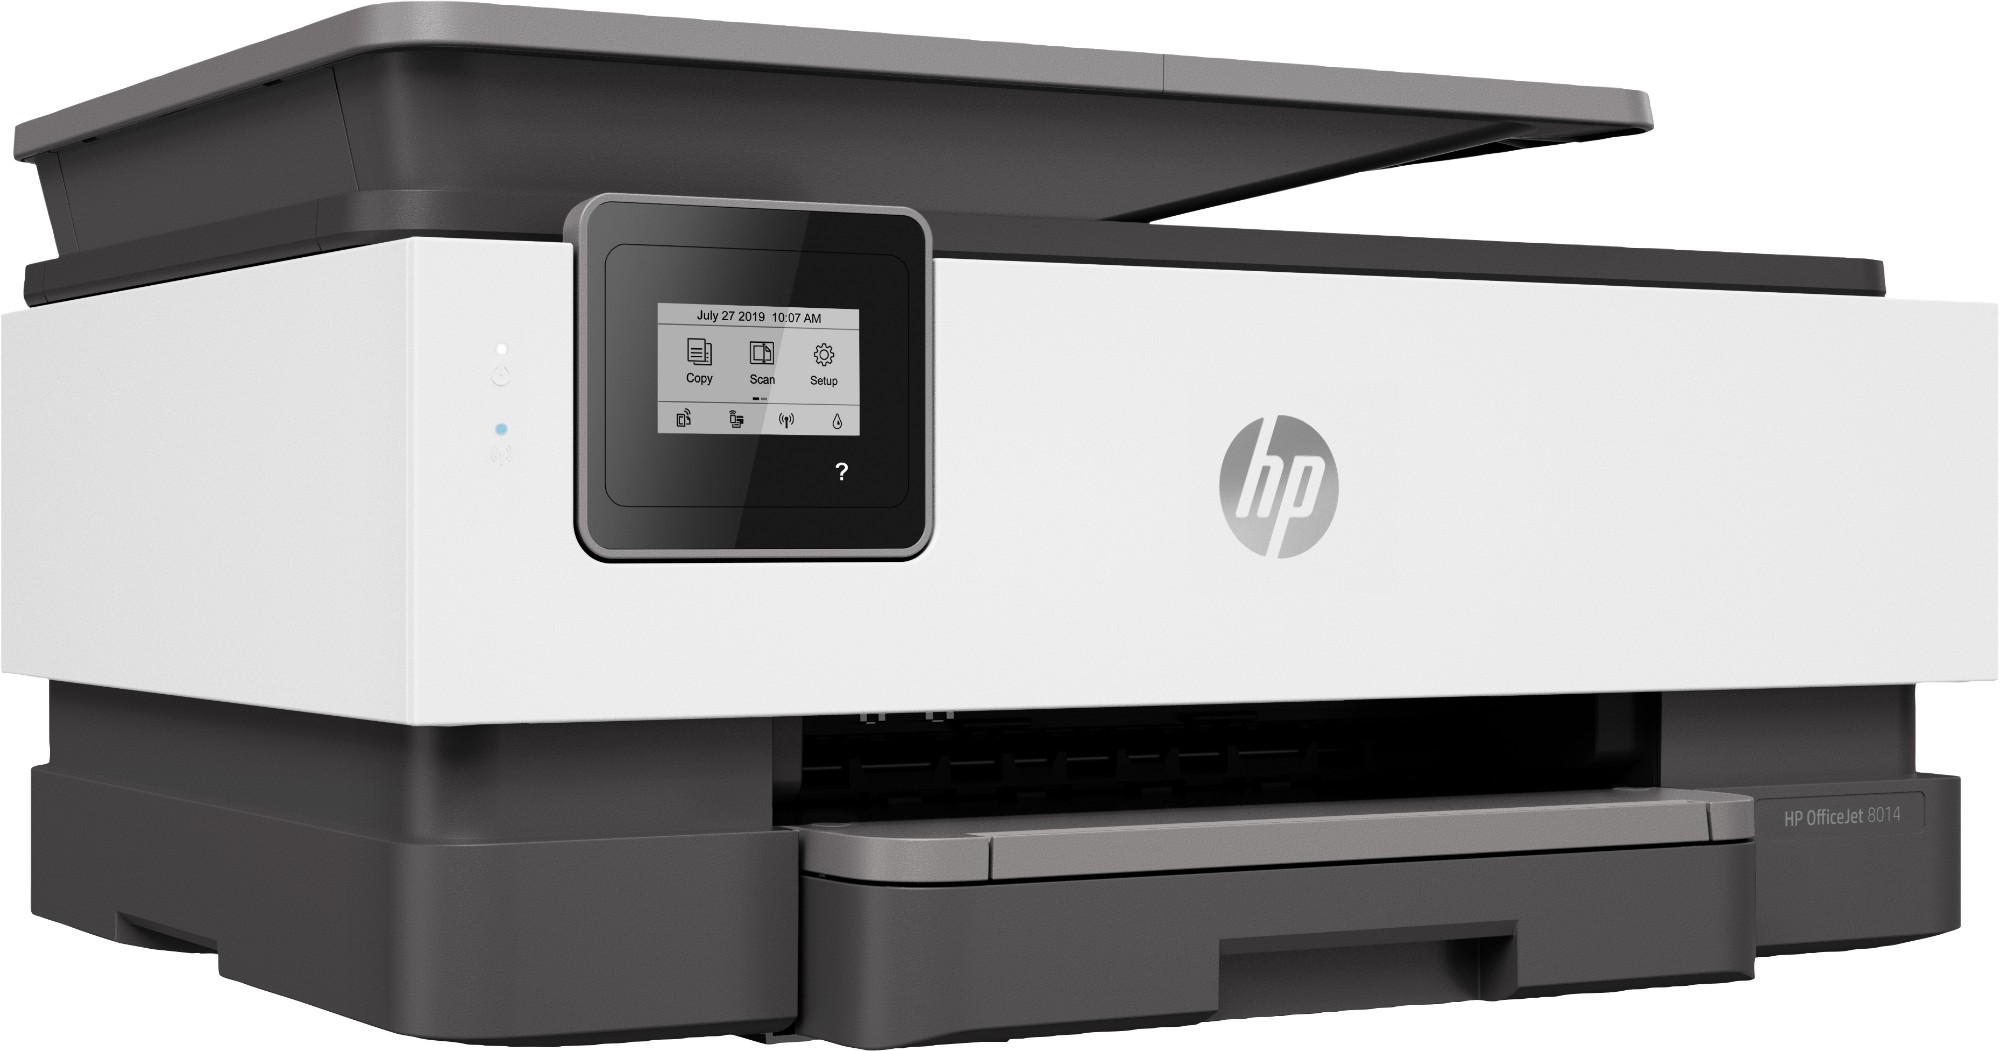 HP OfficeJet 8014 Thermal inkjet A4 4800 x 1200 DPI 18 ppm Wi-Fi